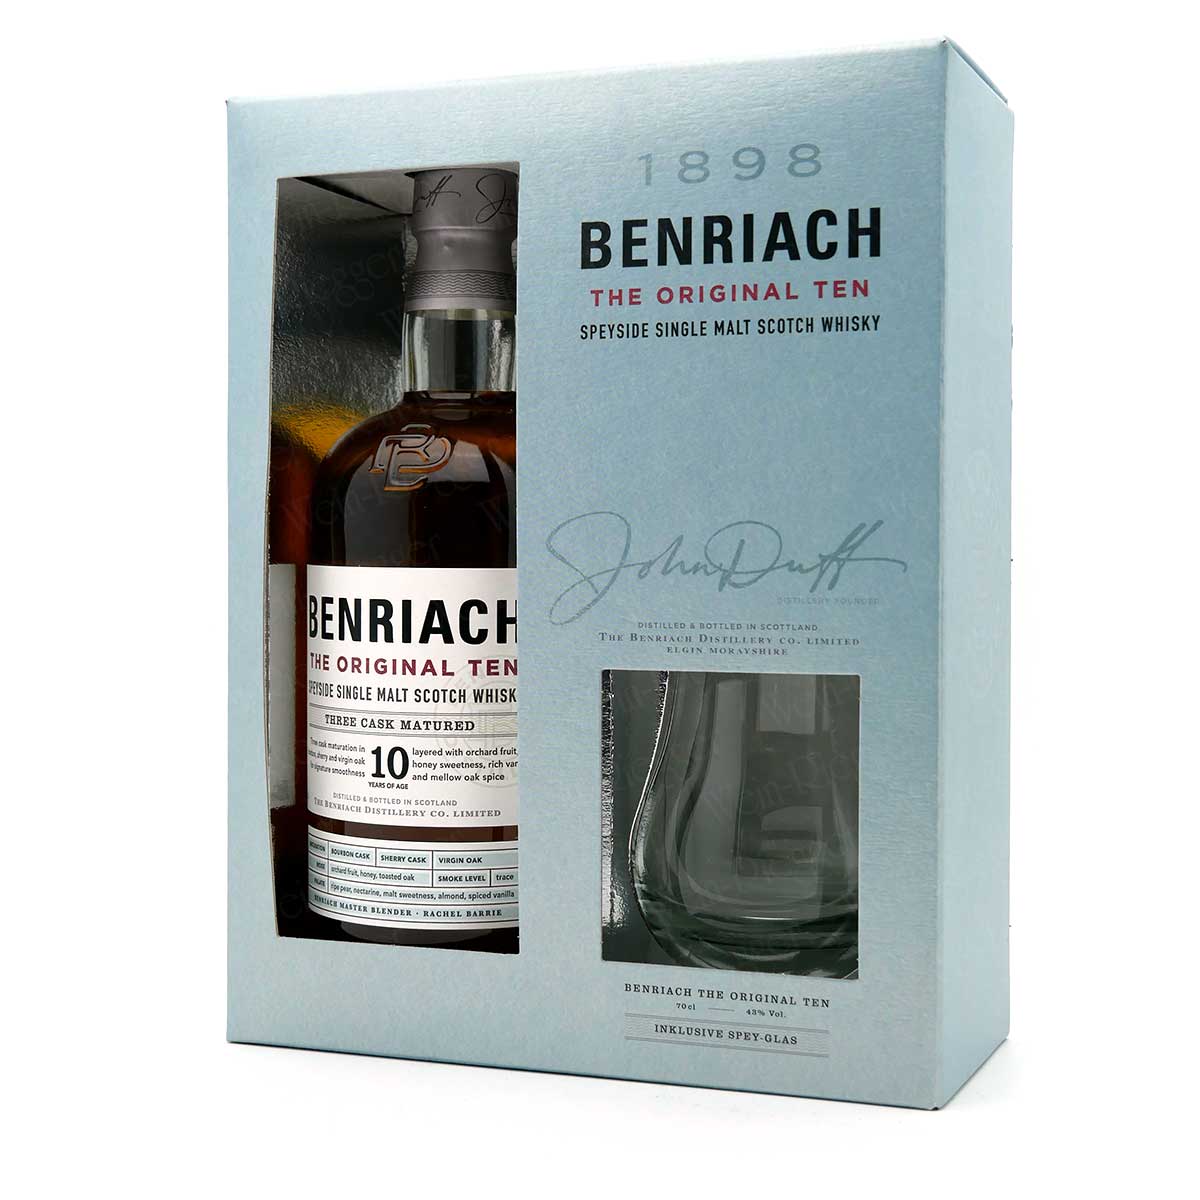 Benriach 10 Jahre - The Original Ten